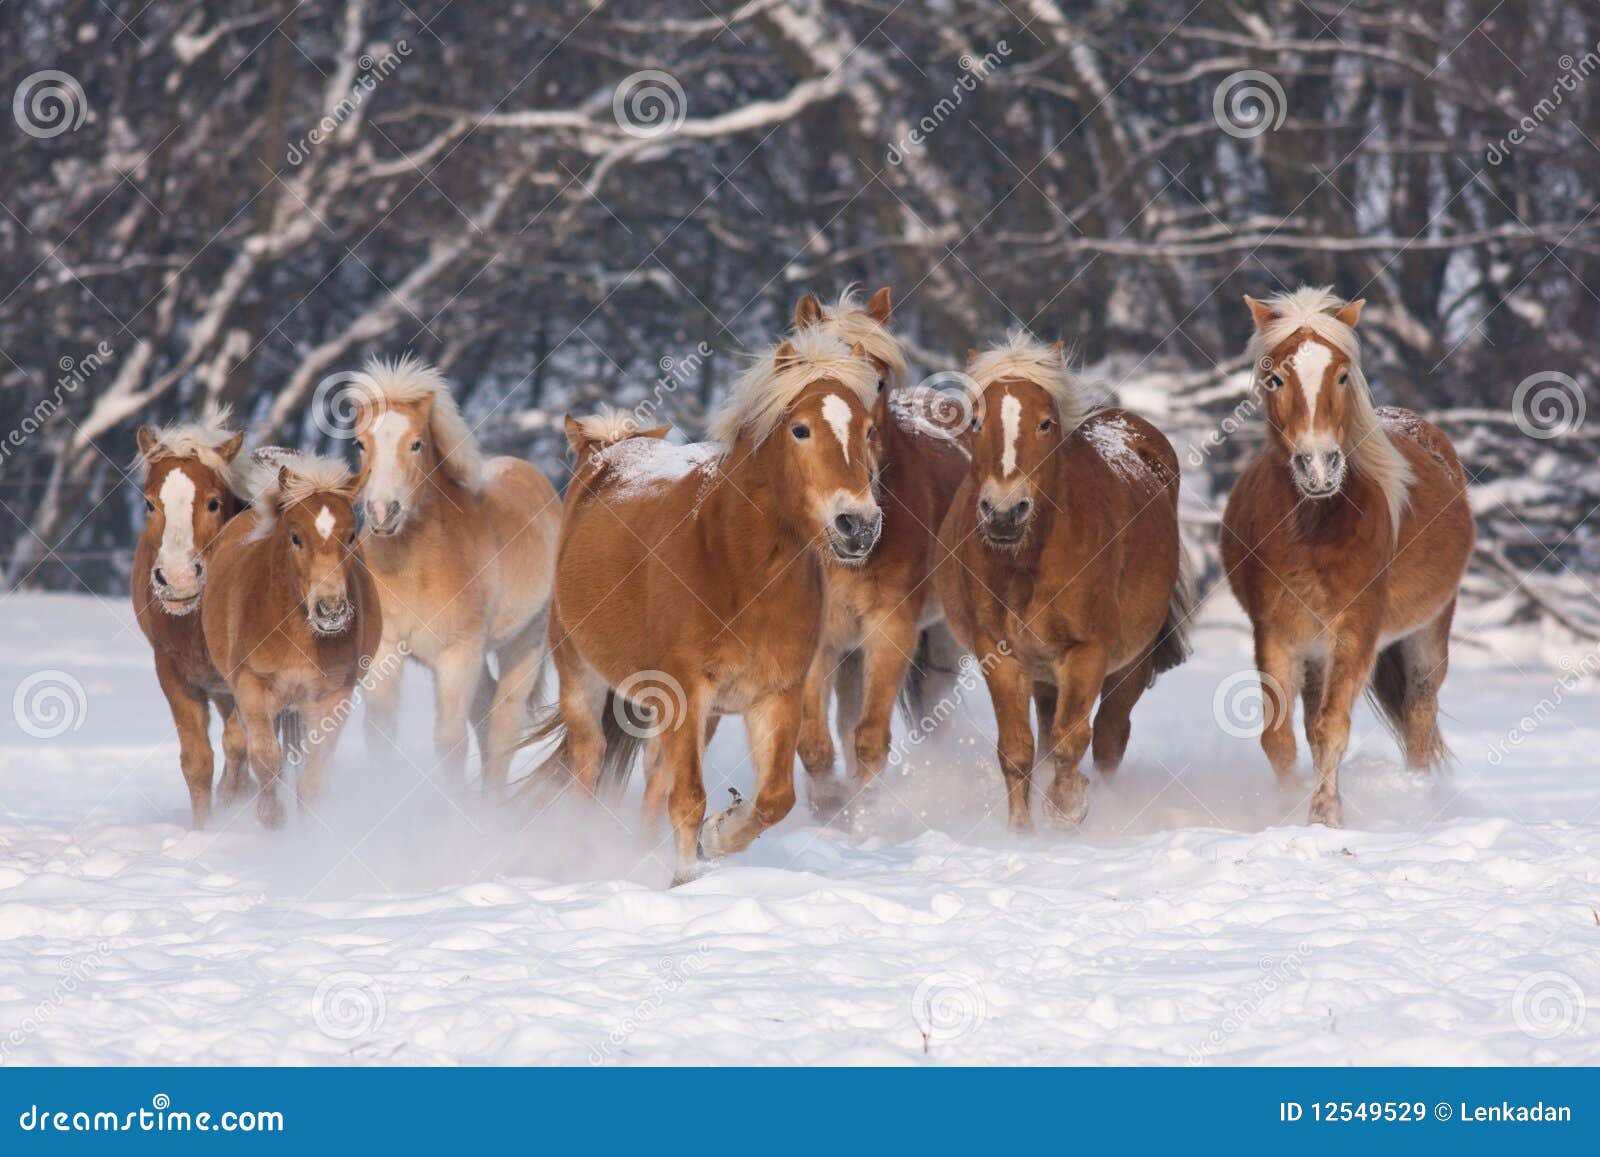 herd of running horses